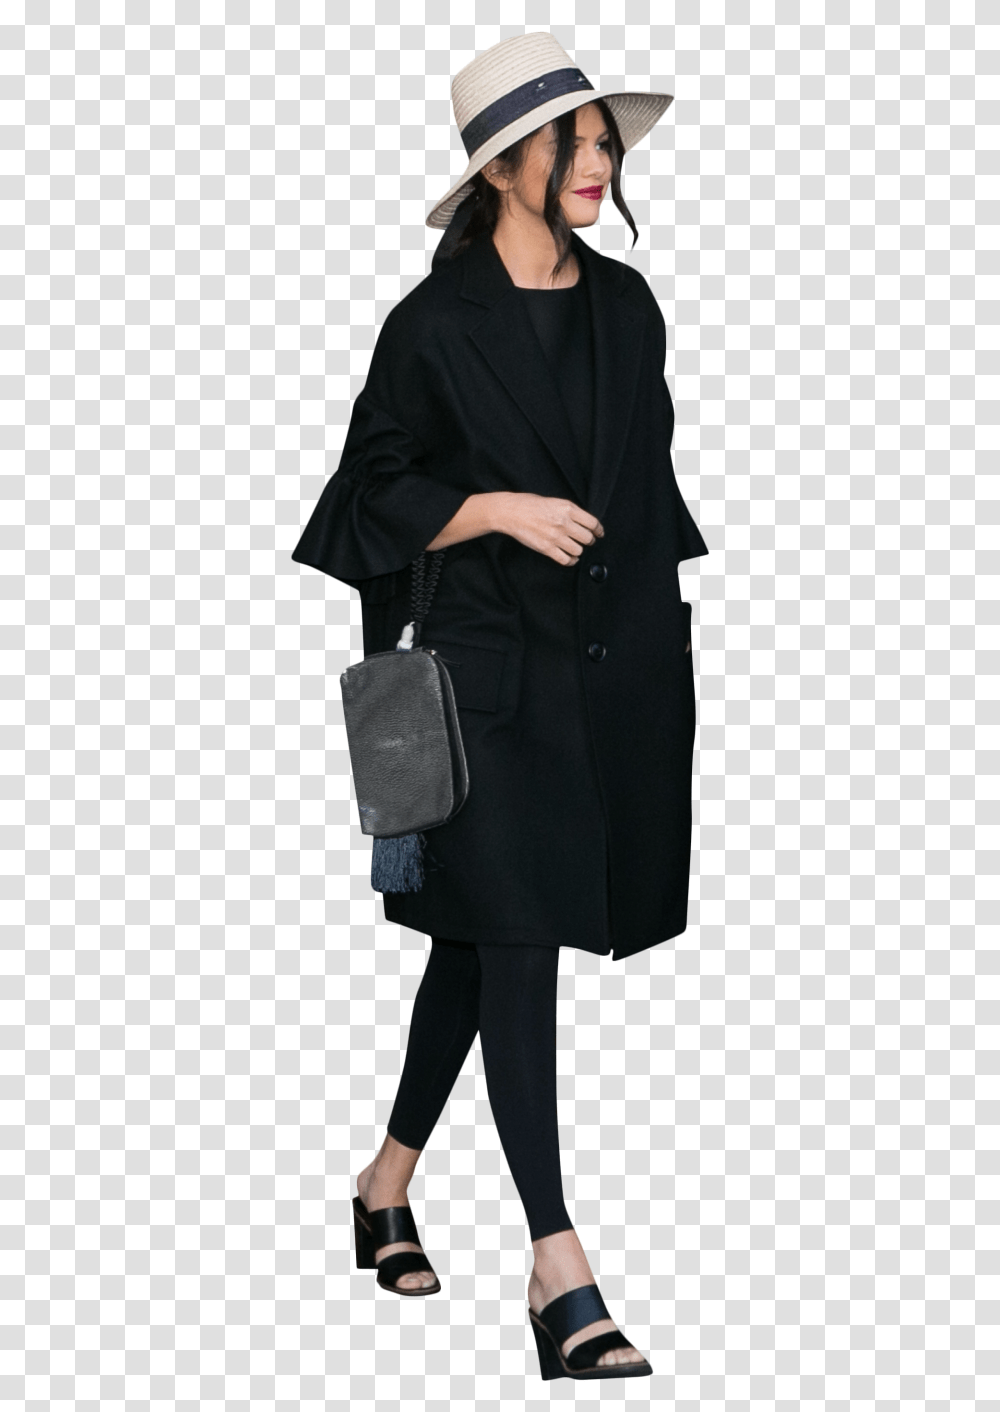 Selena Gomez Black Dress Image Tights, Coat, Hat, Person Transparent Png